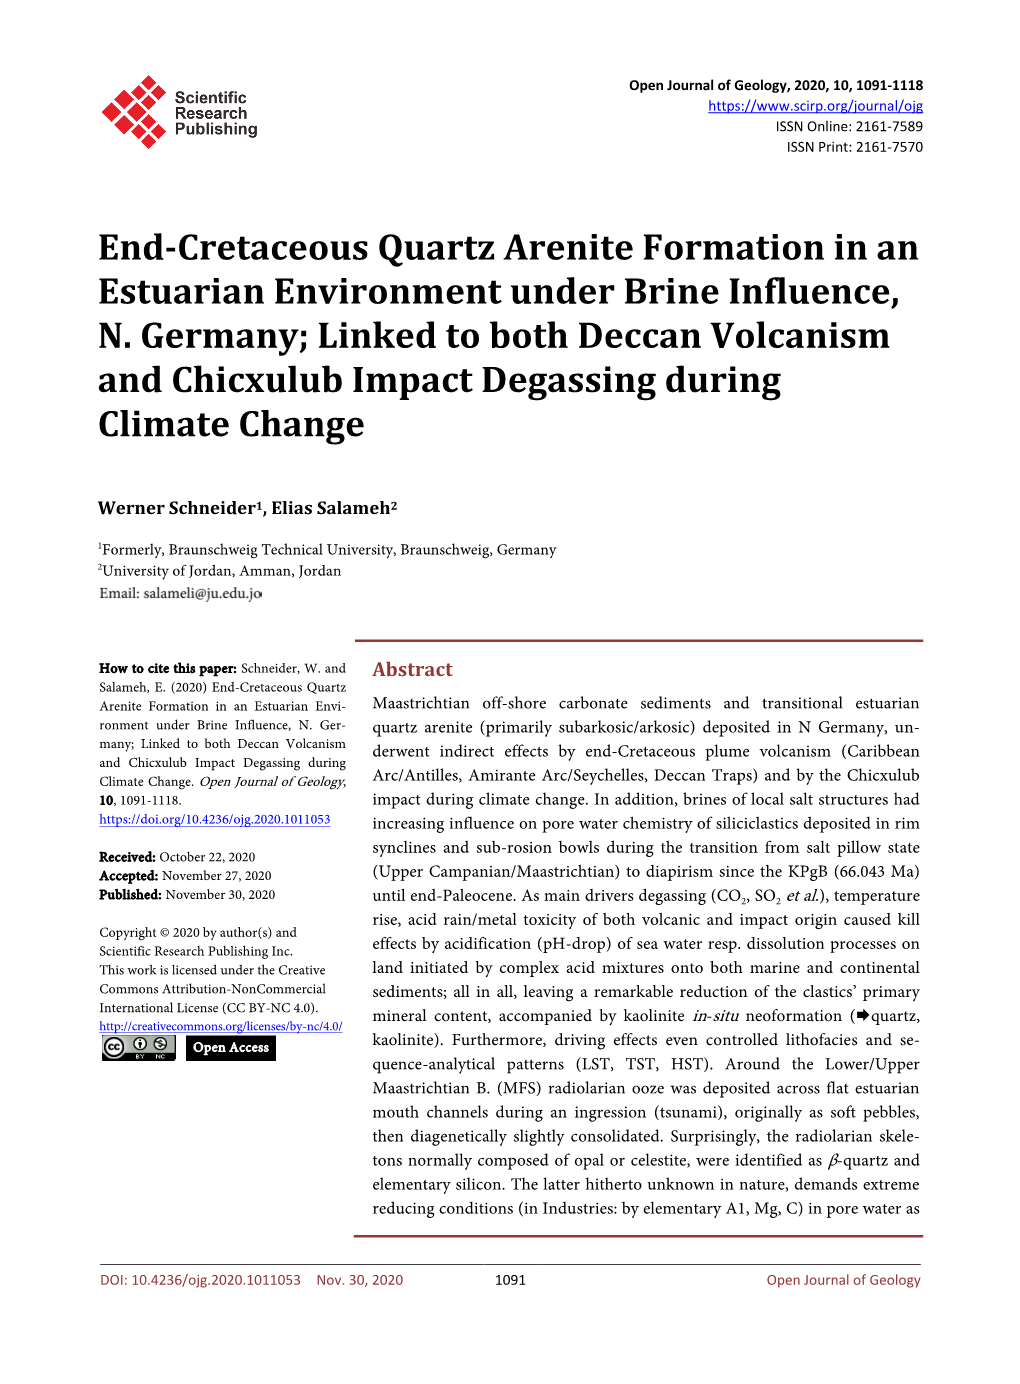 End-Cretaceous Quartz Arenite Formation in an Estuarian Environment Under Brine Influence, N